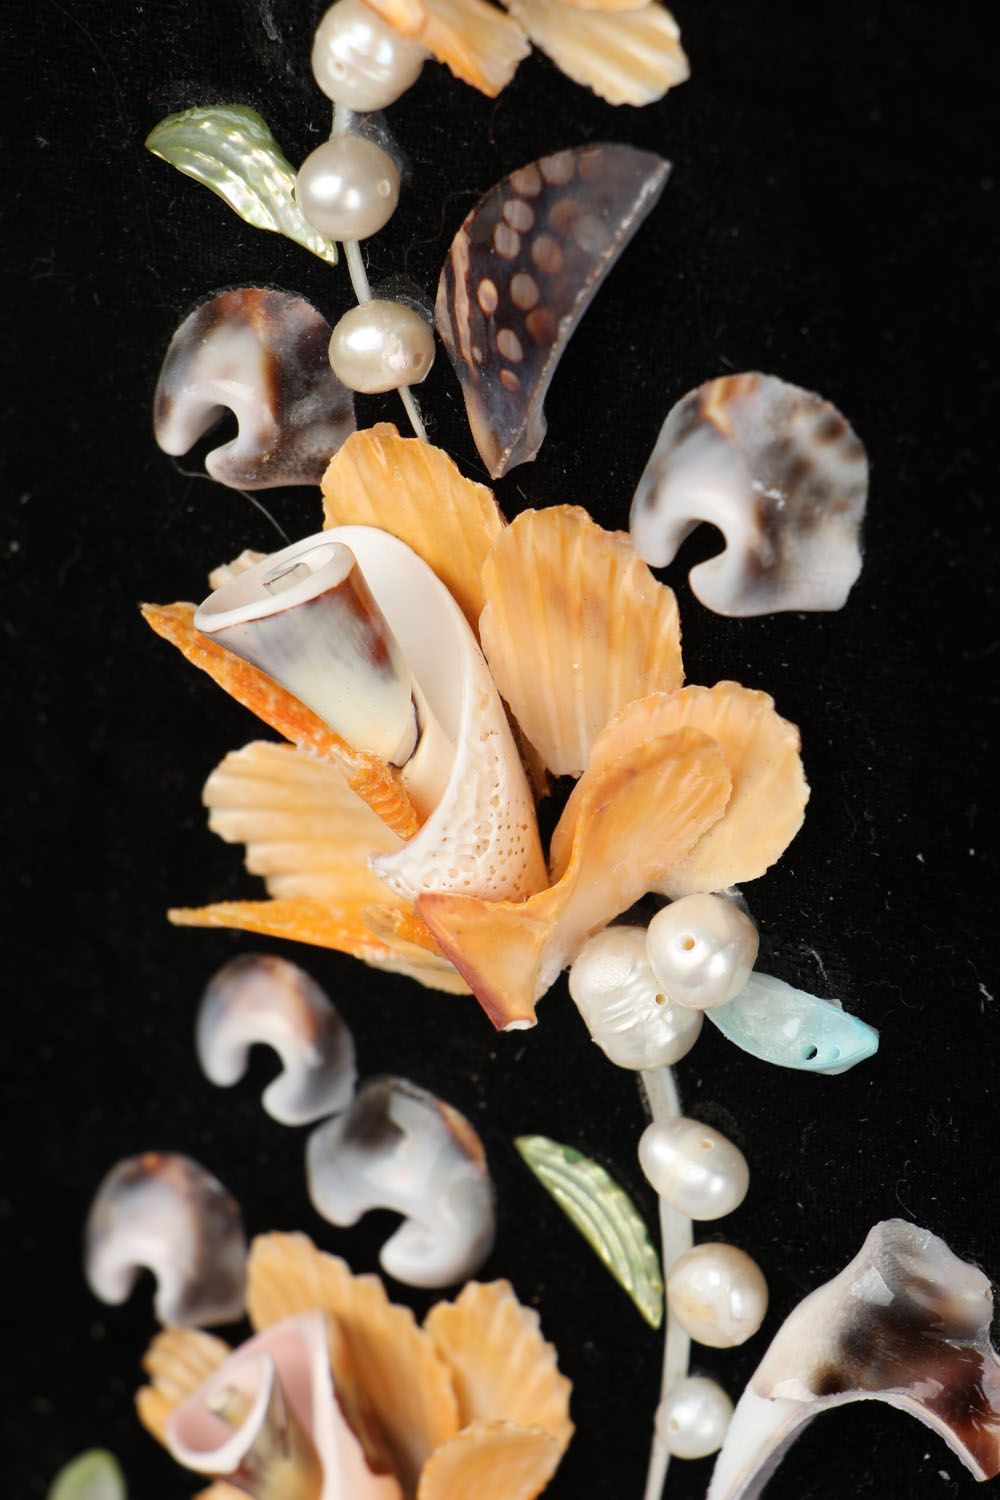 Unusual panel with shells and fish bones photo 2